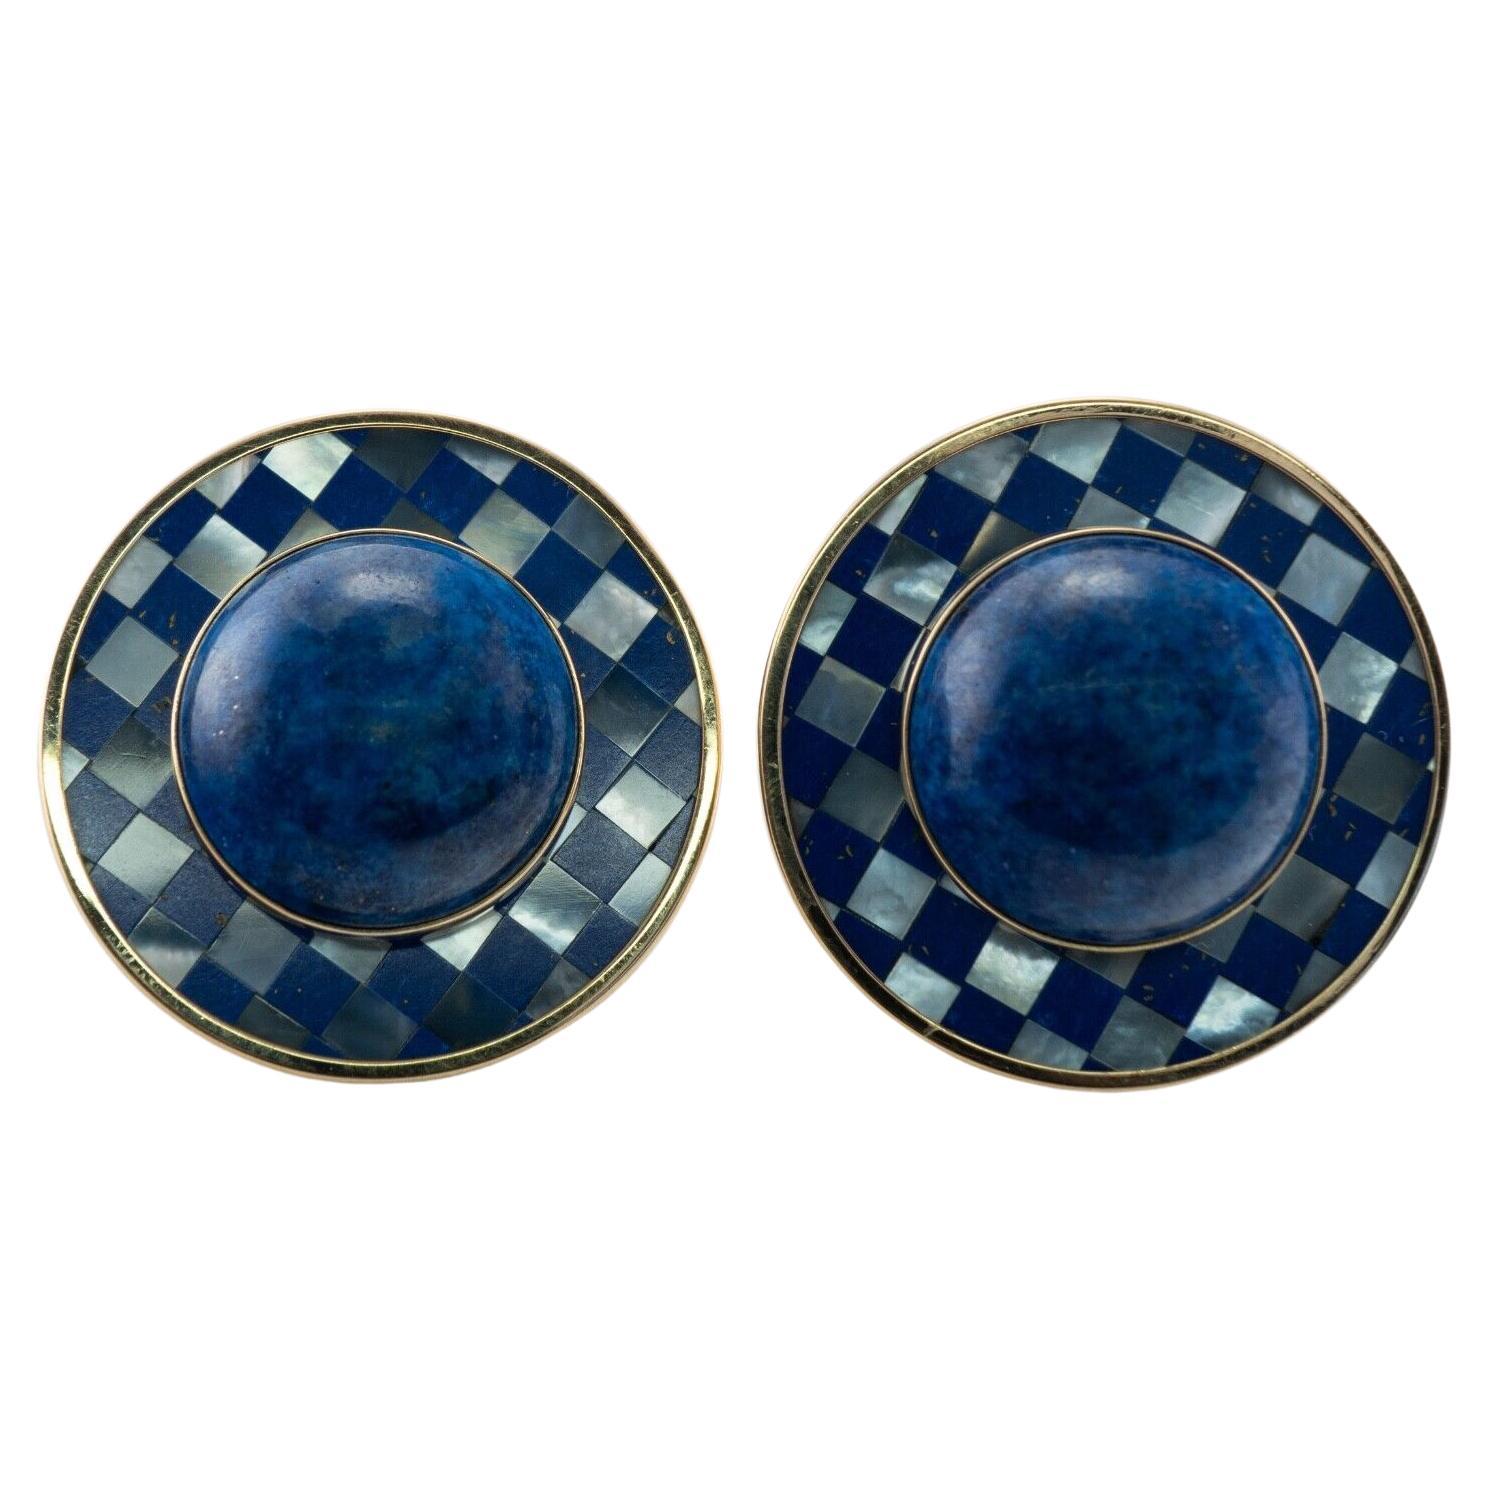 Peter Brams Lapis Lazuli Earrings Mother of Pearl 14K Gold